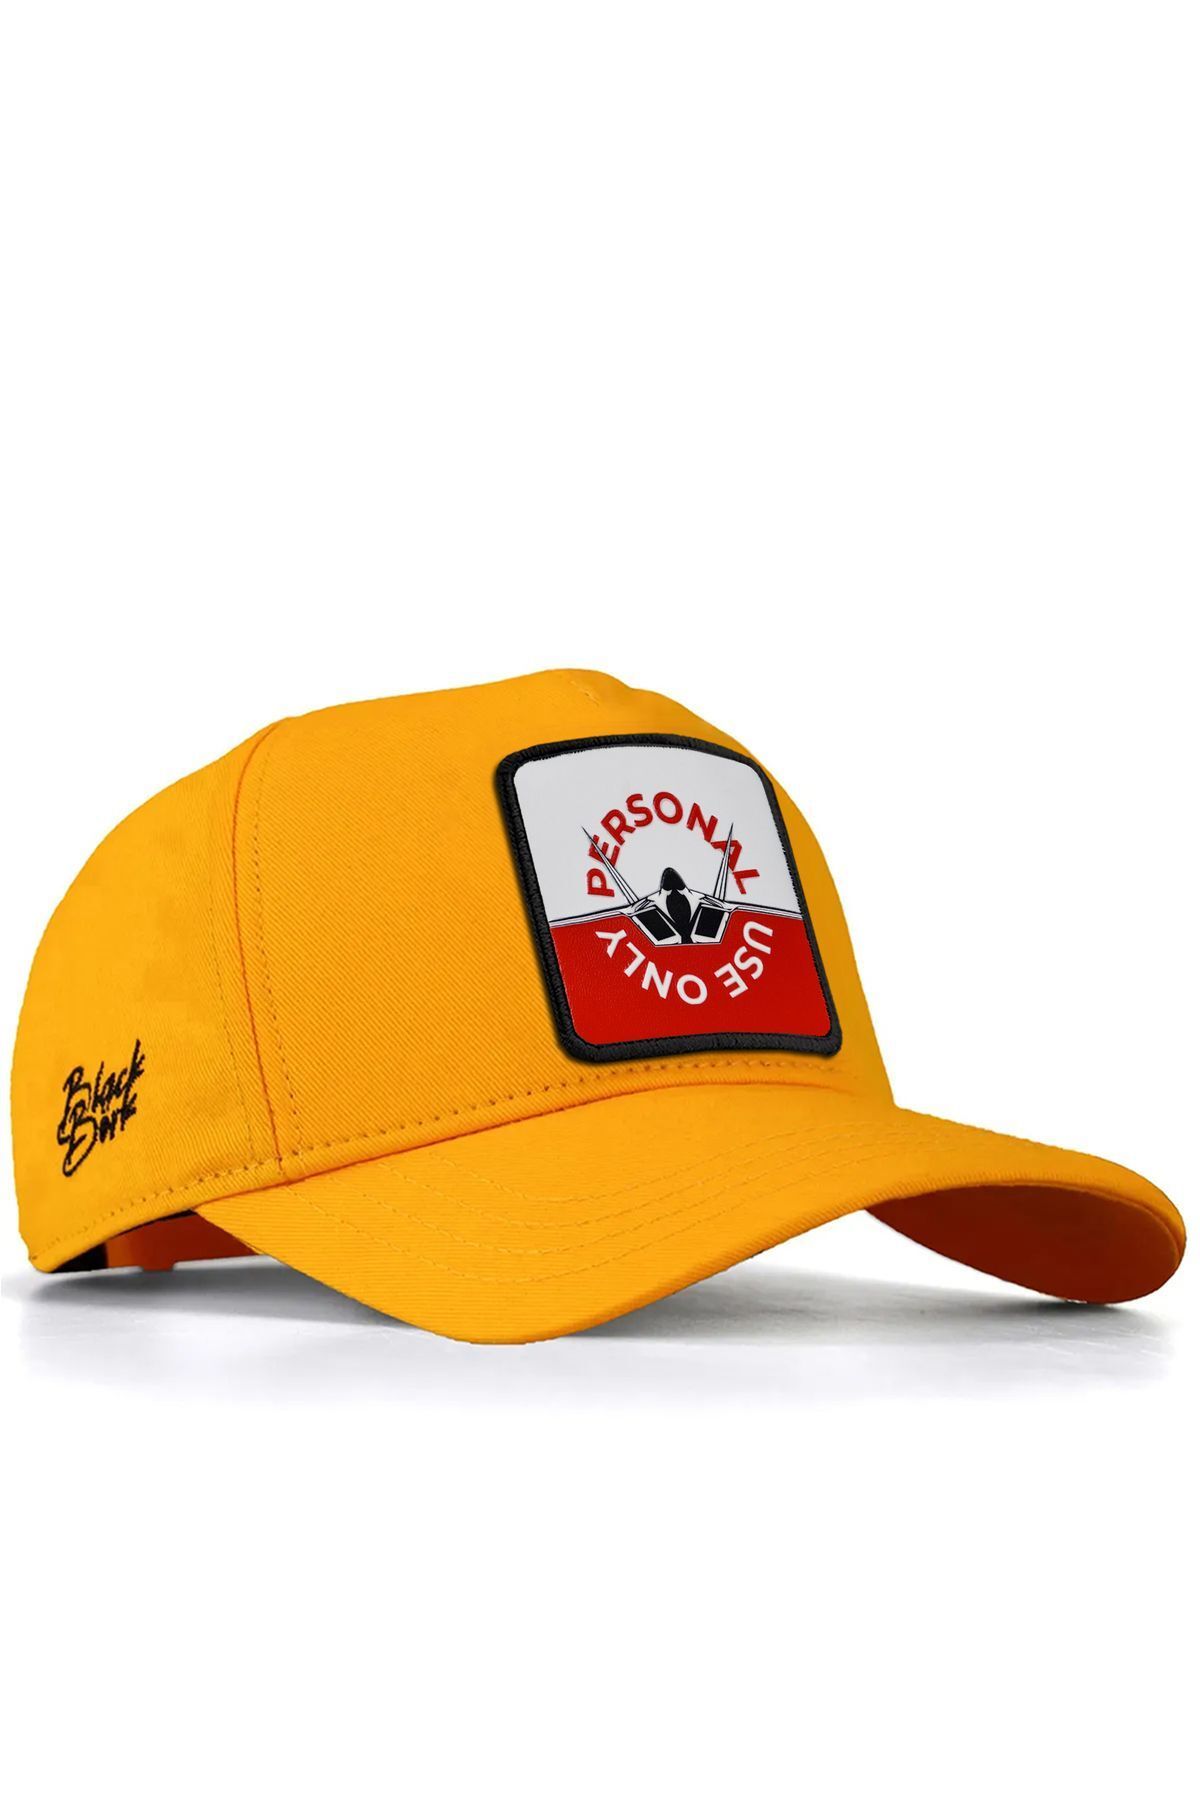 BlackBörk V1 Baseball Kahraman Kaan Lisanlı Sarı Şapka